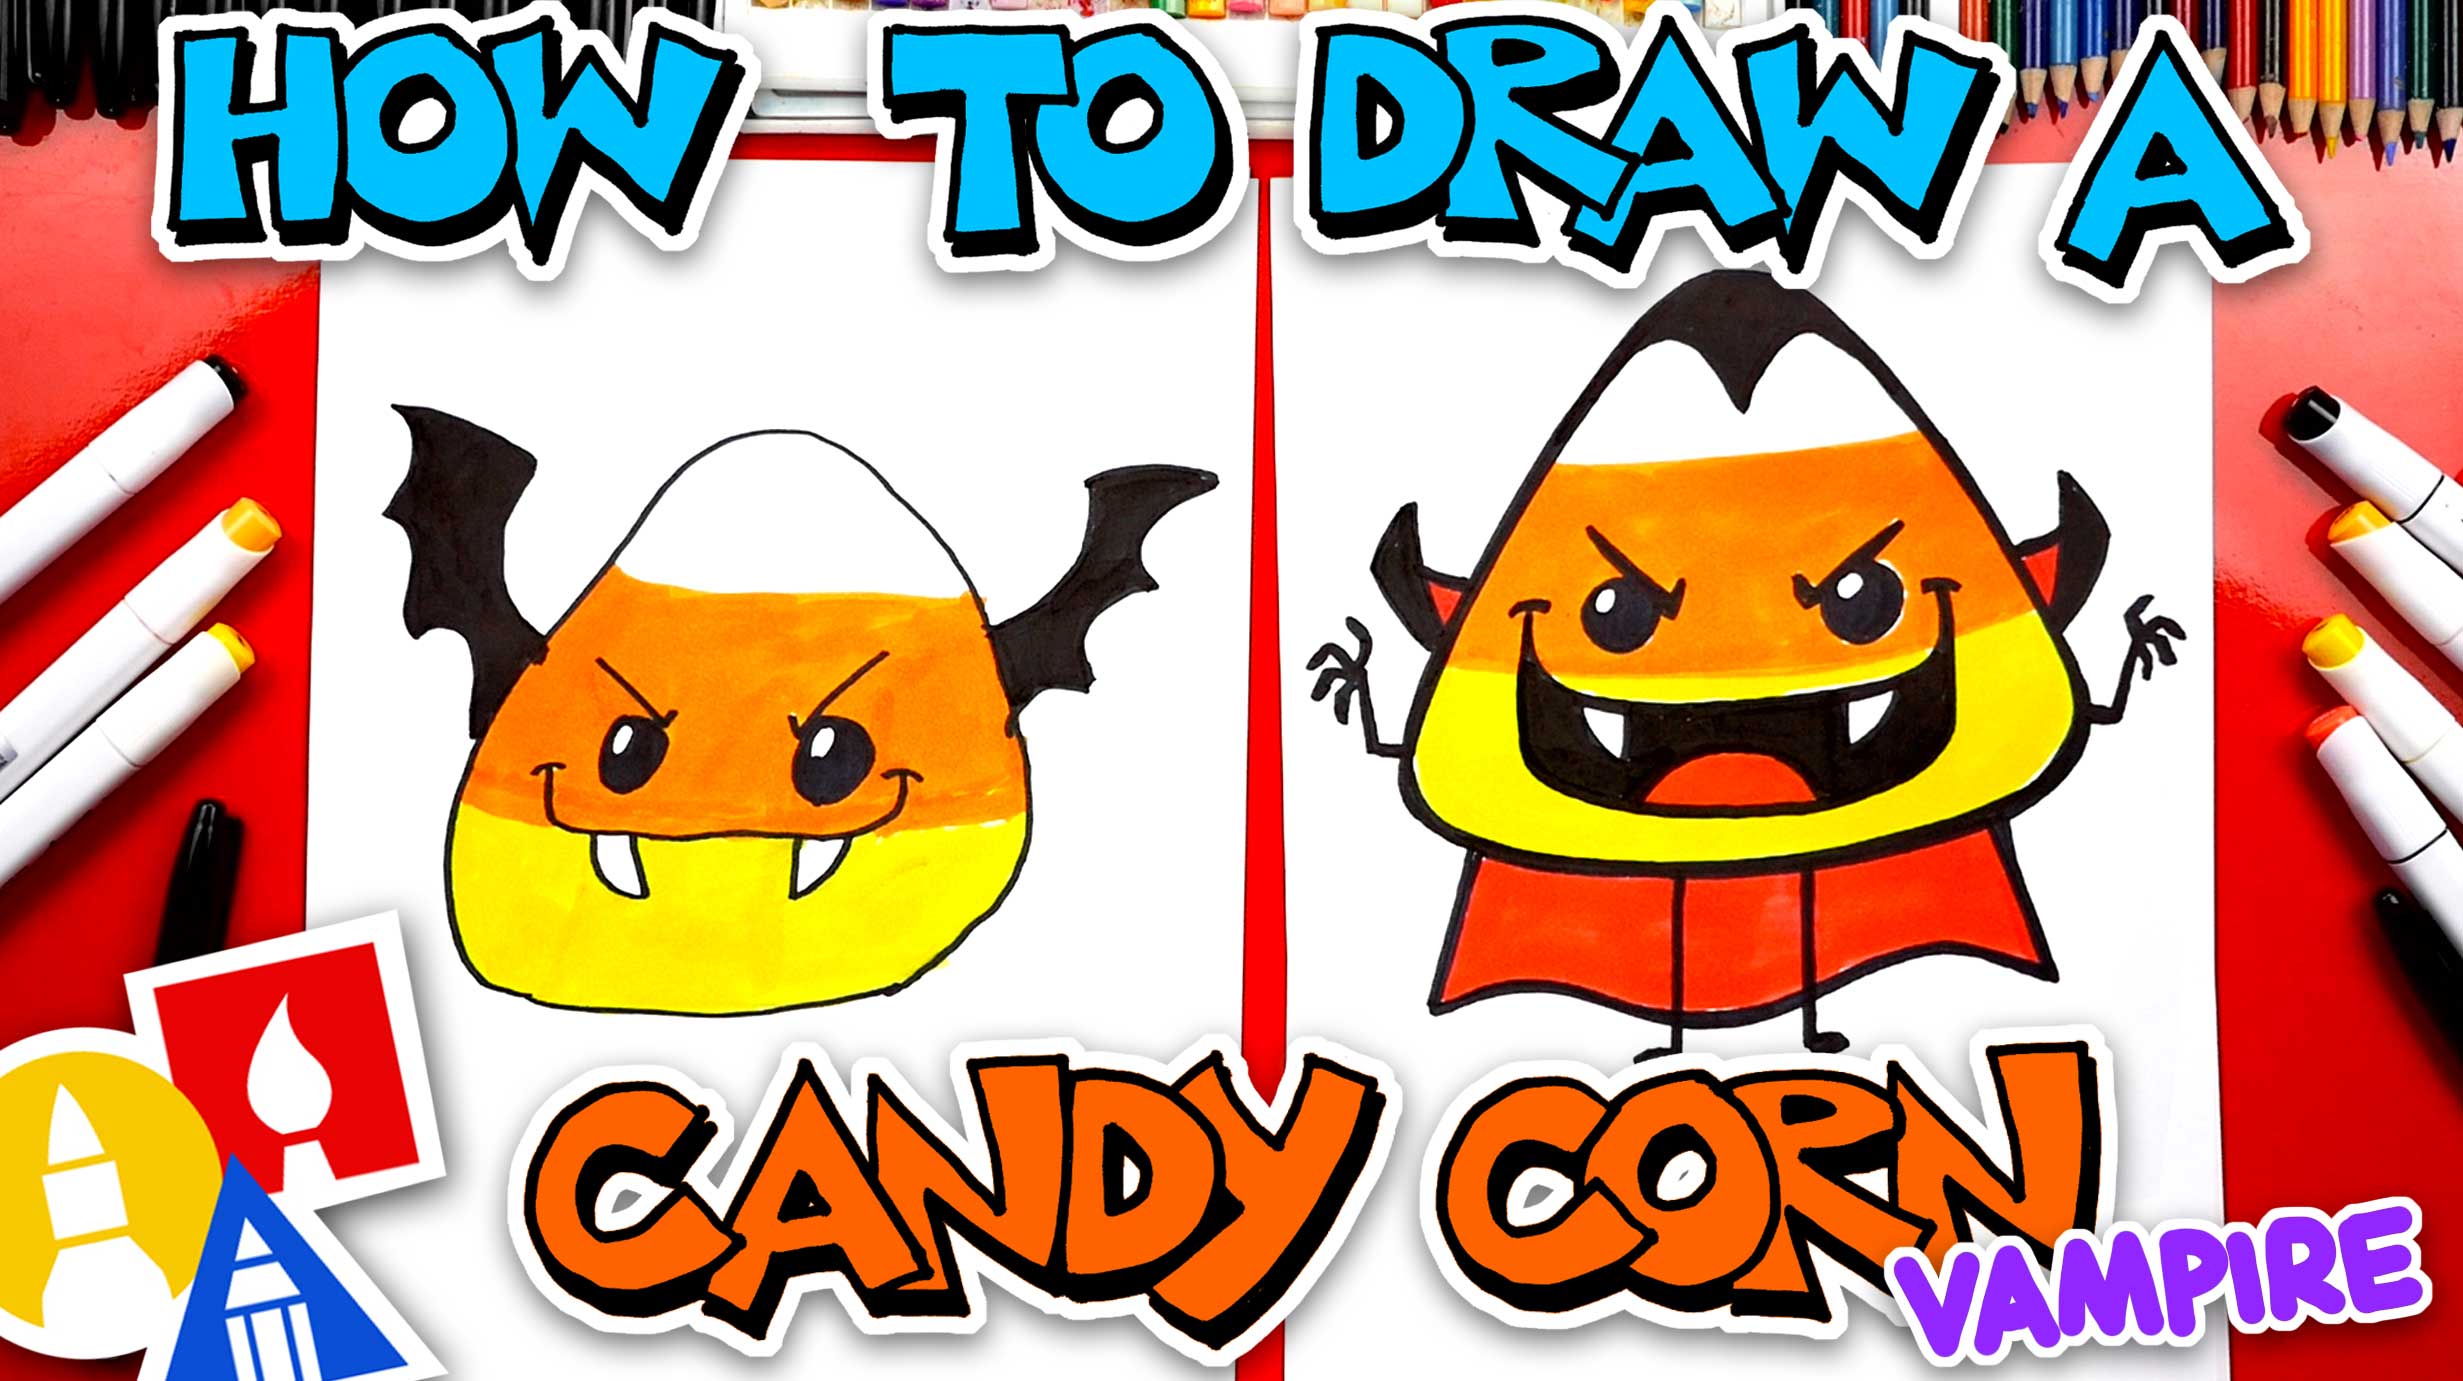 https://artforkidshub.com/wp-content/uploads/2020/10/How-To-Draw-A-Candy-Corn-Vampire-thumbnail.jpg